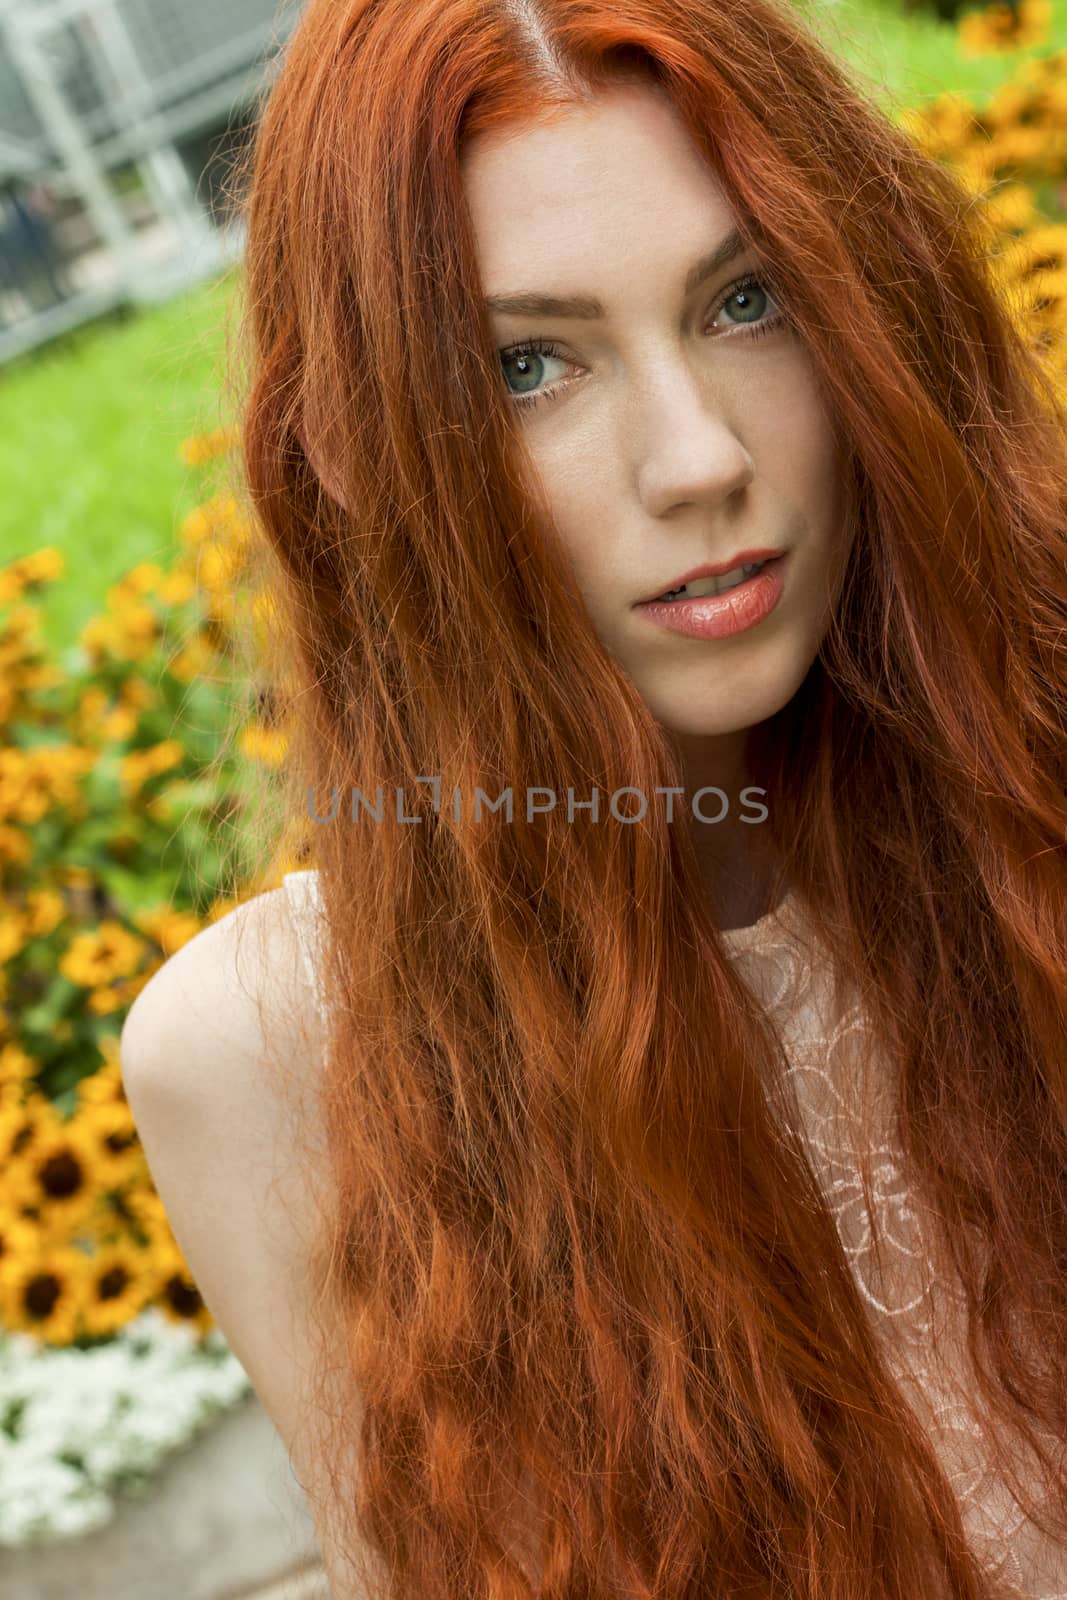 Long Hair Woman At the Garden looking Afar by juniart